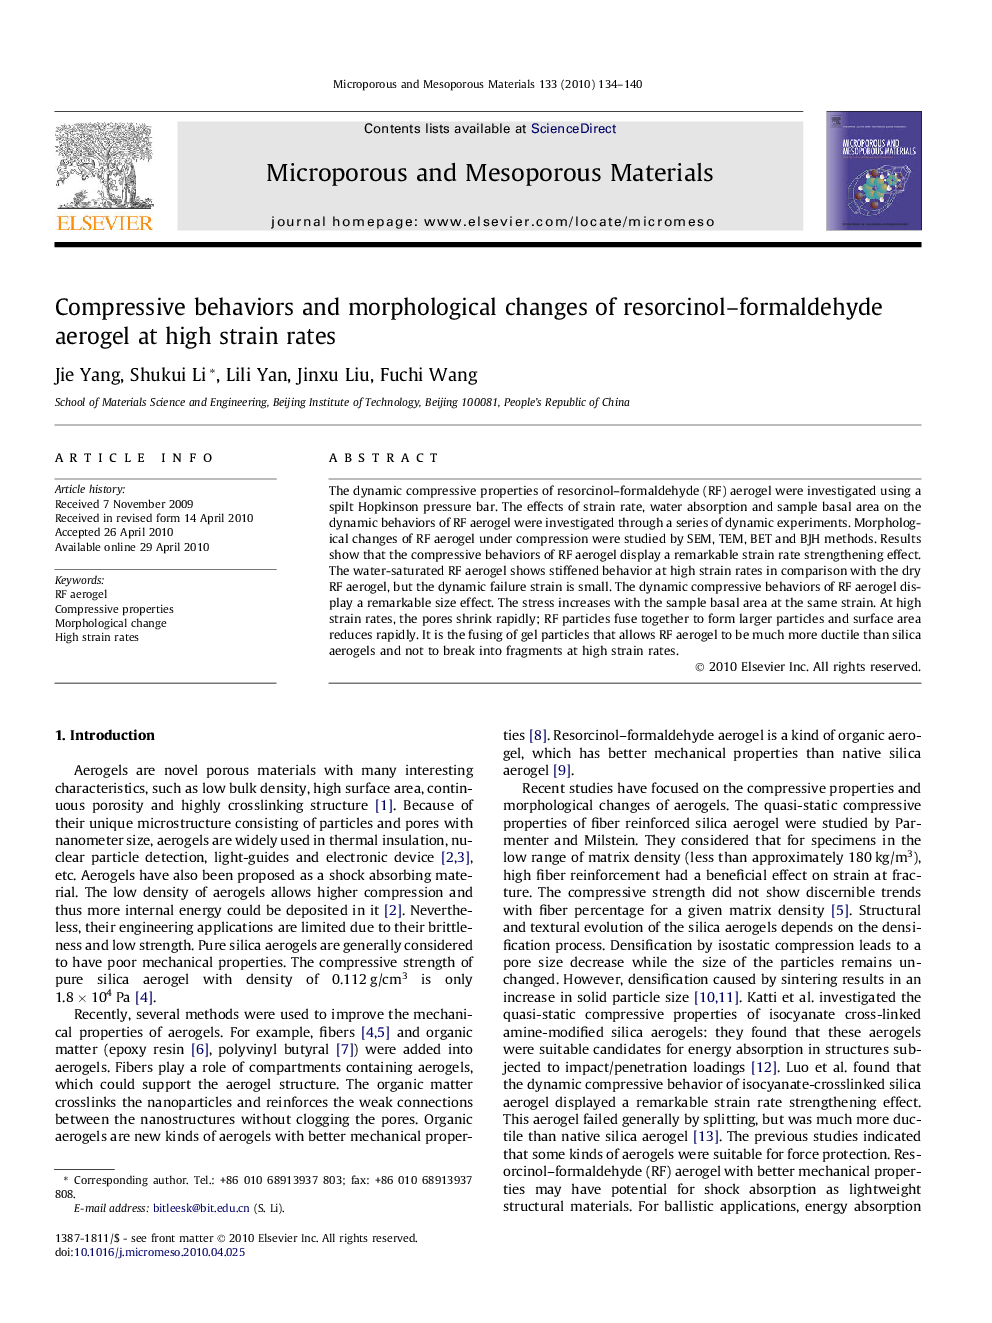 Compressive behaviors and morphological changes of resorcinol–formaldehyde aerogel at high strain rates